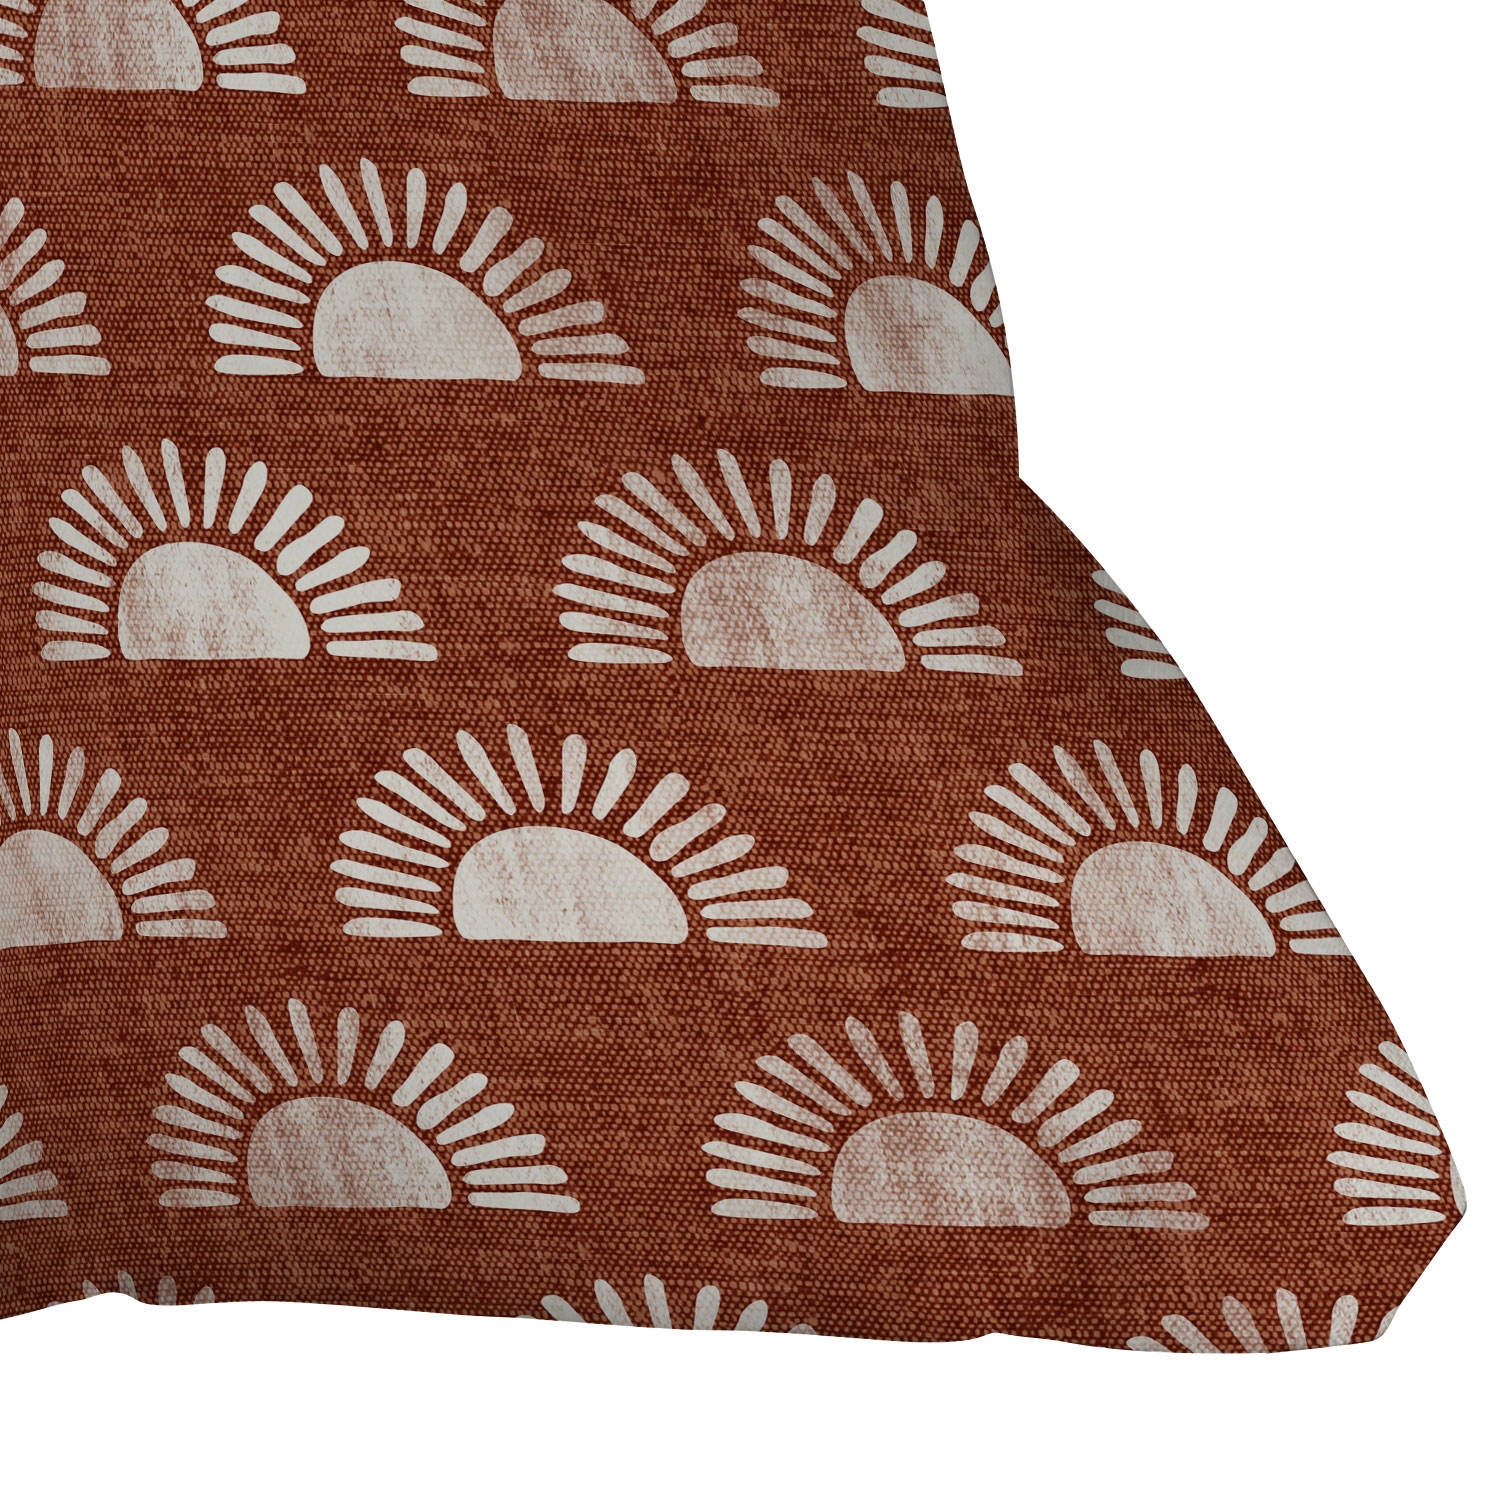 Block Print Suns On Rust by Little Arrow Design Co - Outdoor Throw Pillow 18" x 18" - Image 3